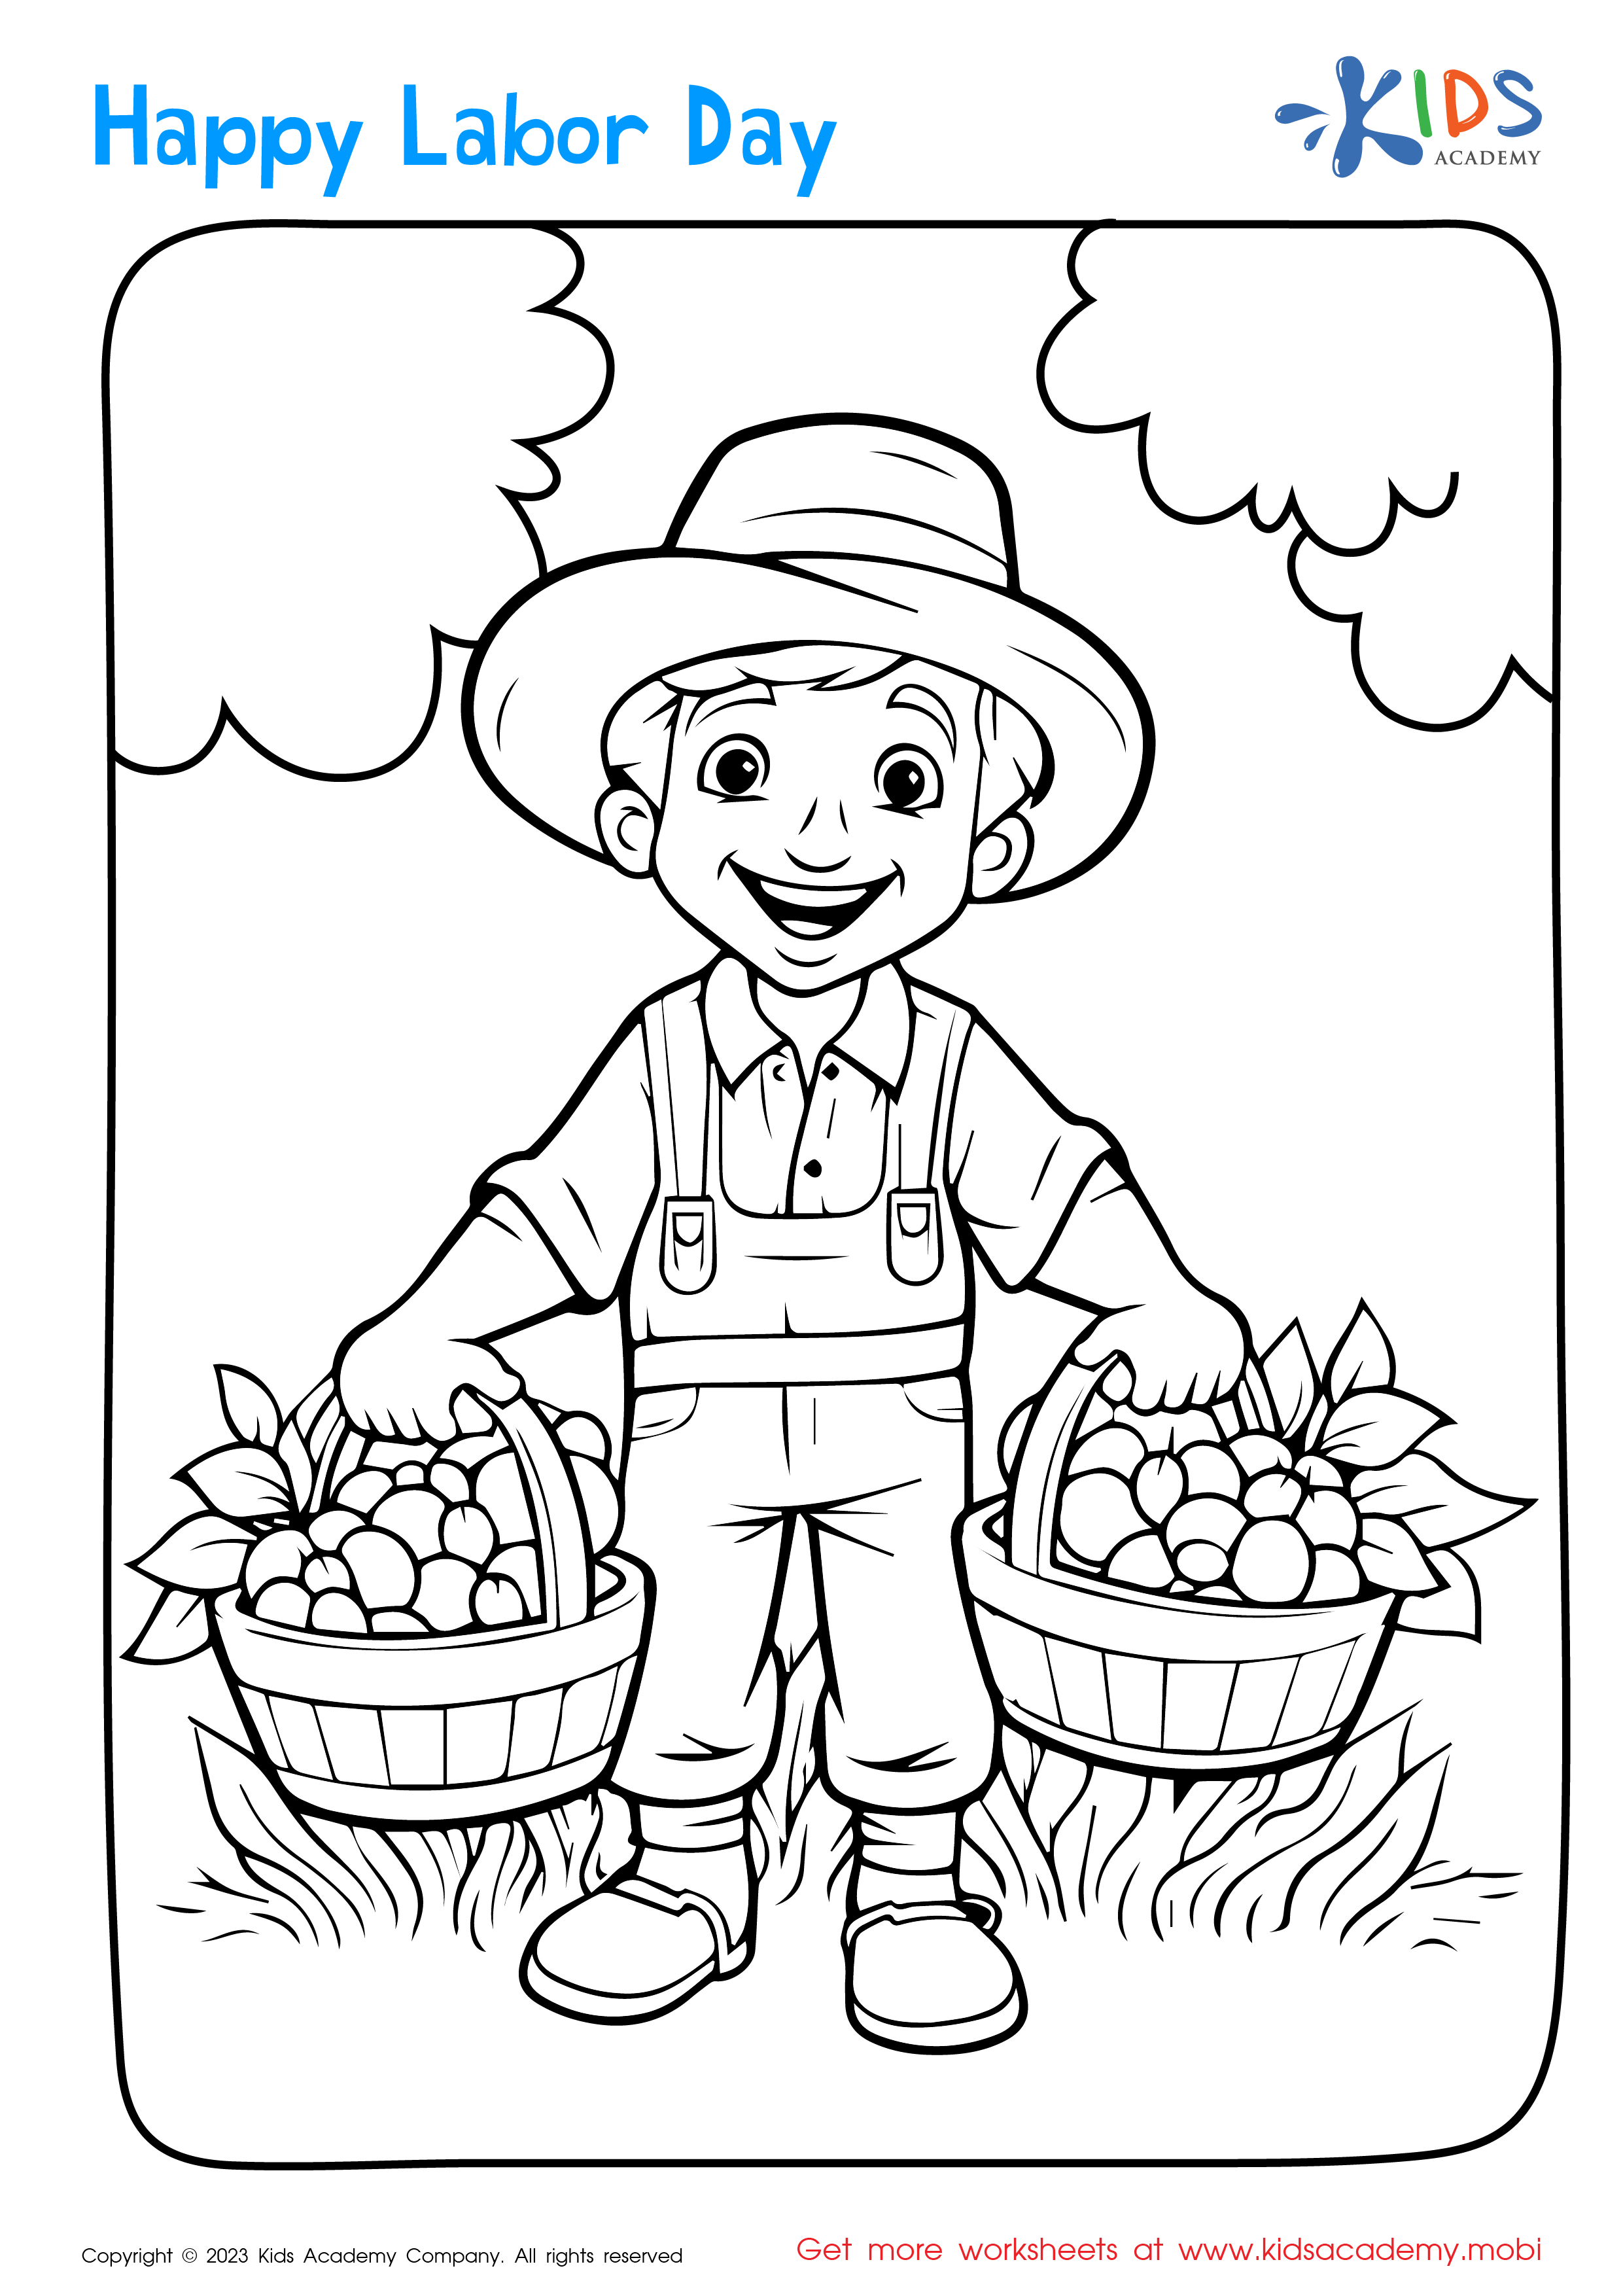 Labor Day: Farmer